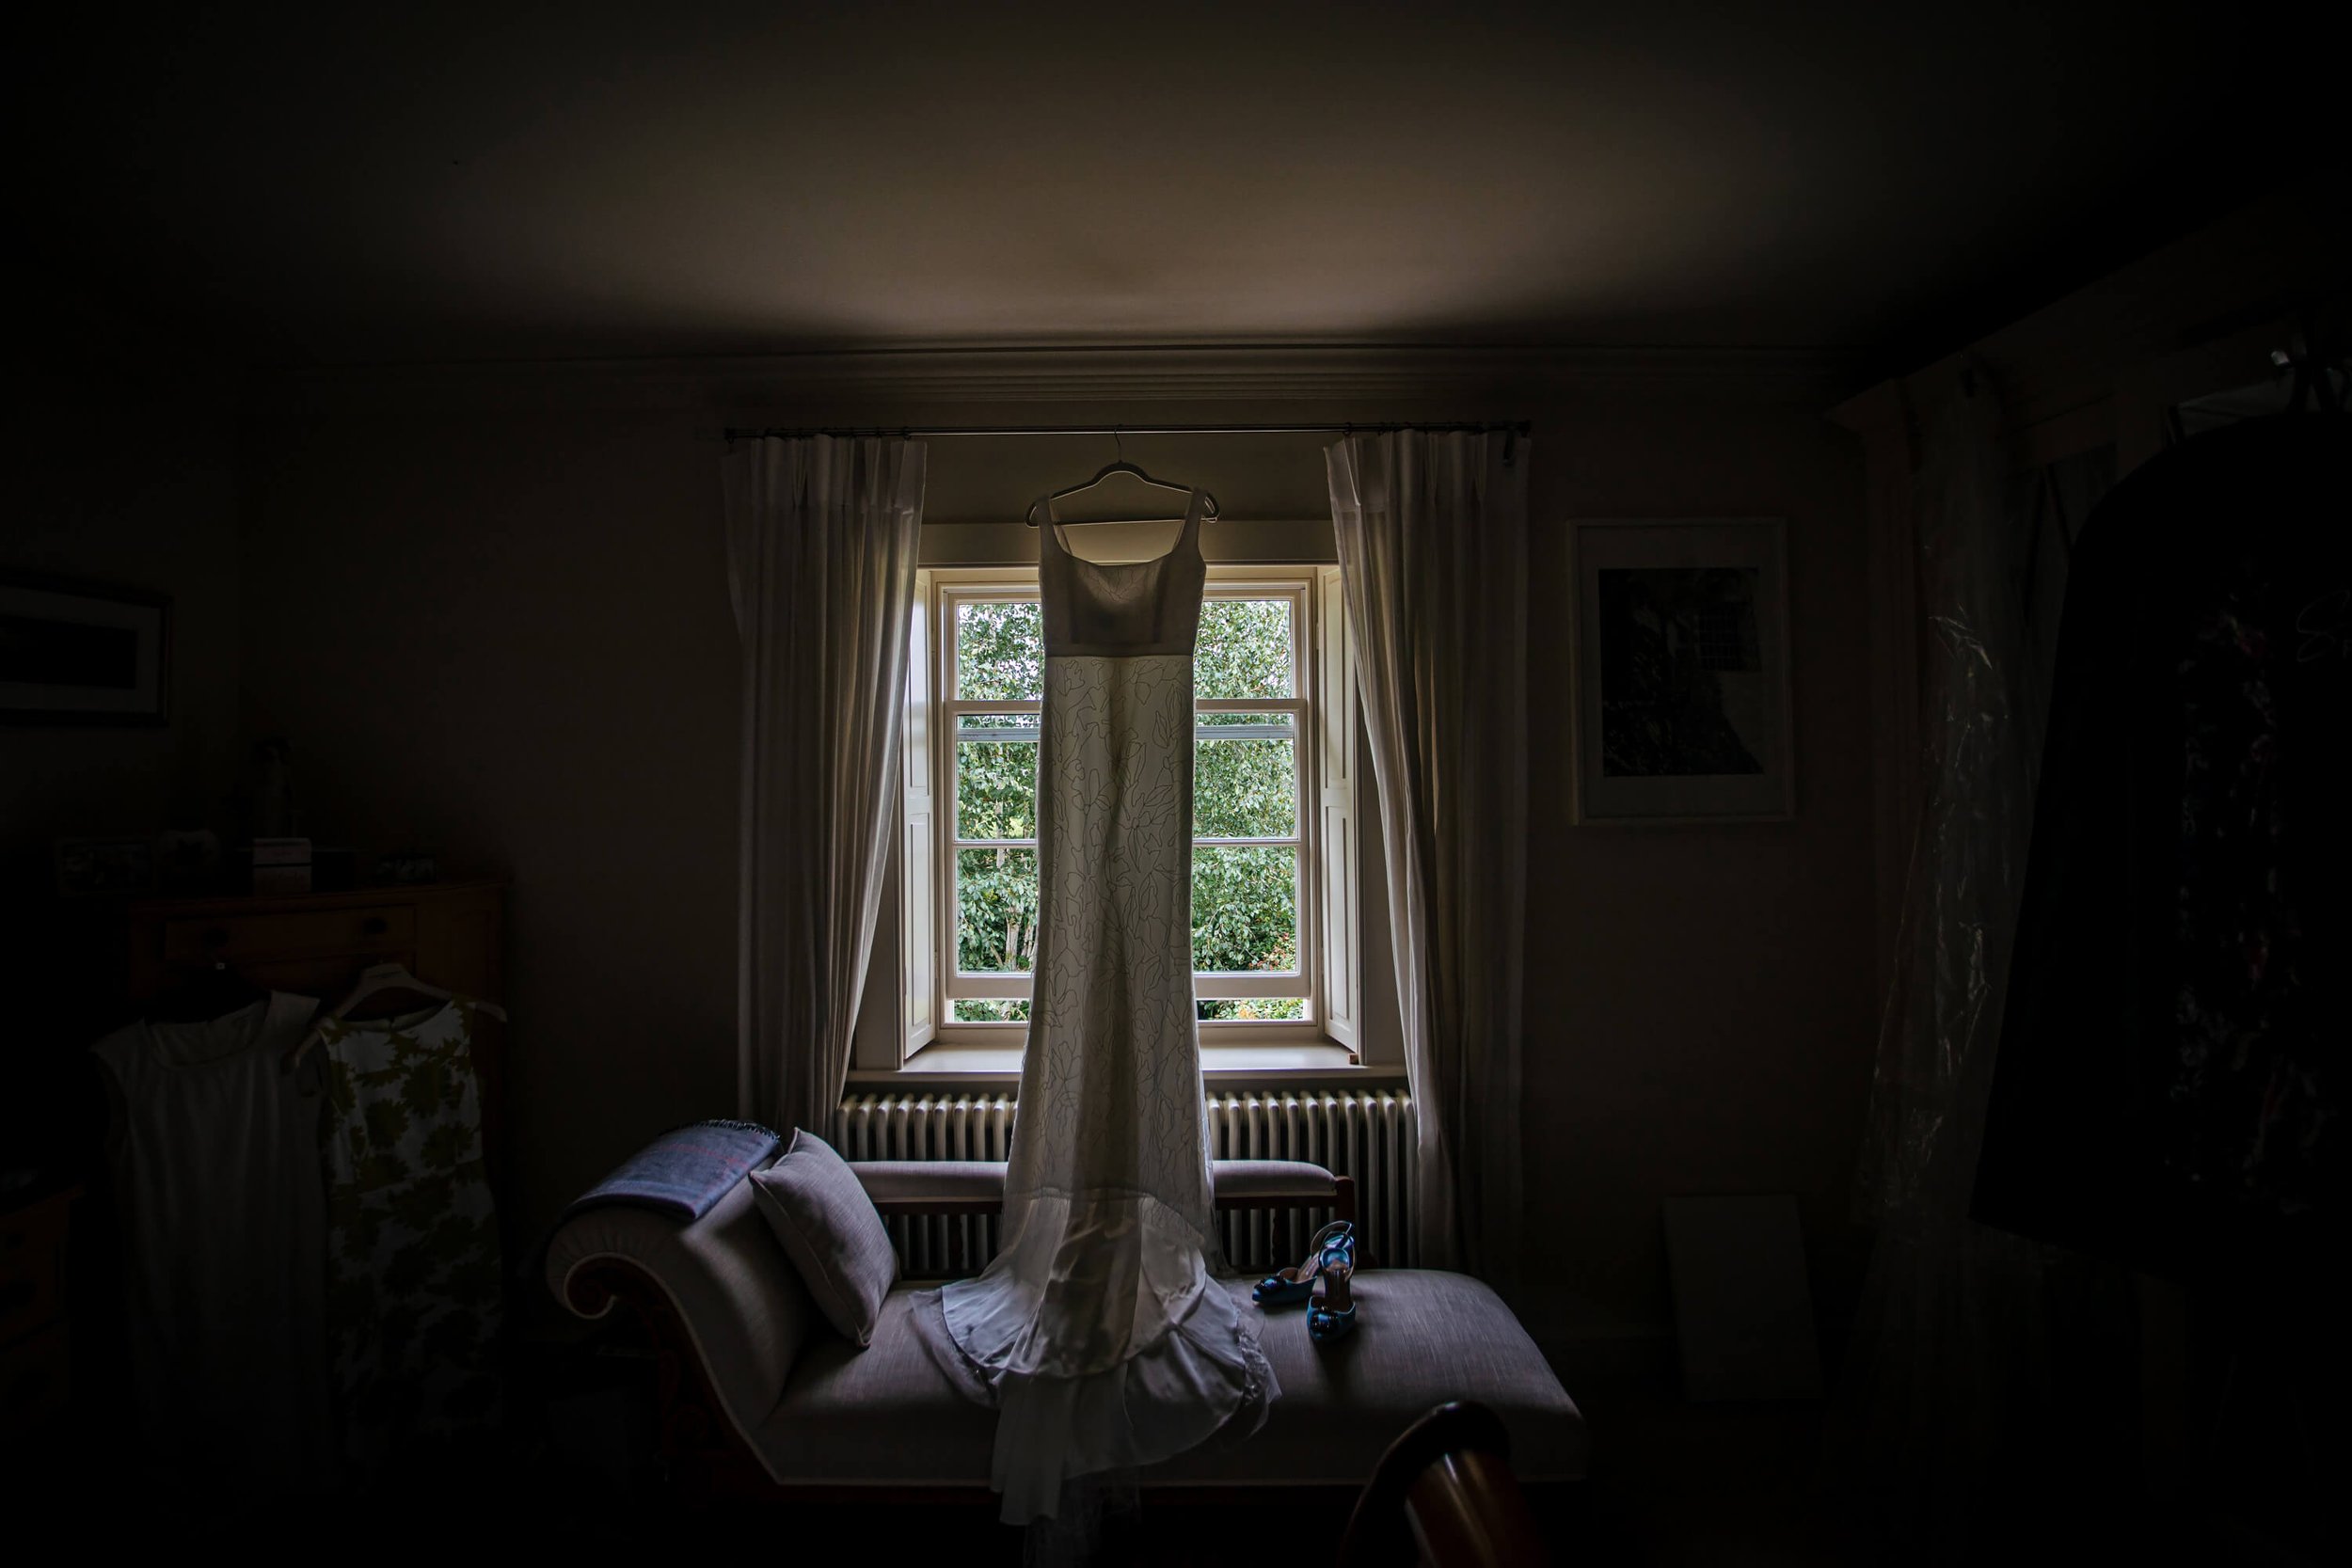 Wedding dress hanging in the window light